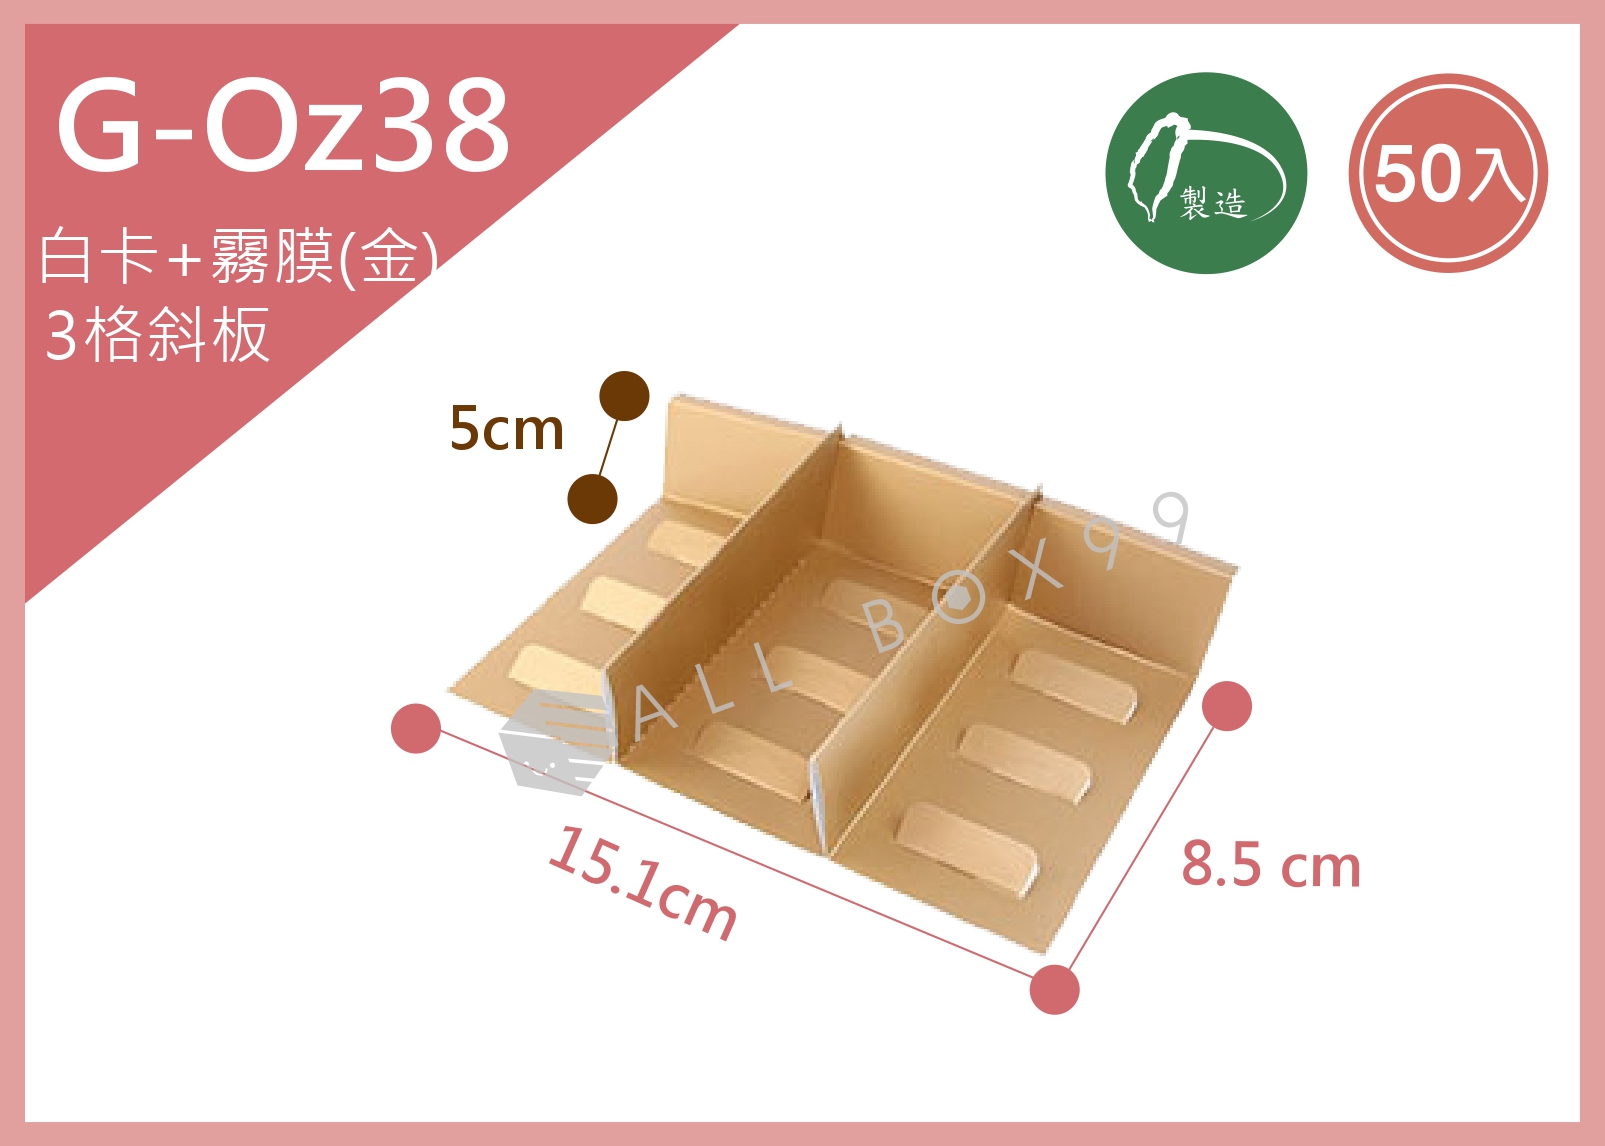 《G-OZ38》1/3 T字隔板內襯 - 金 【平裝出貨】